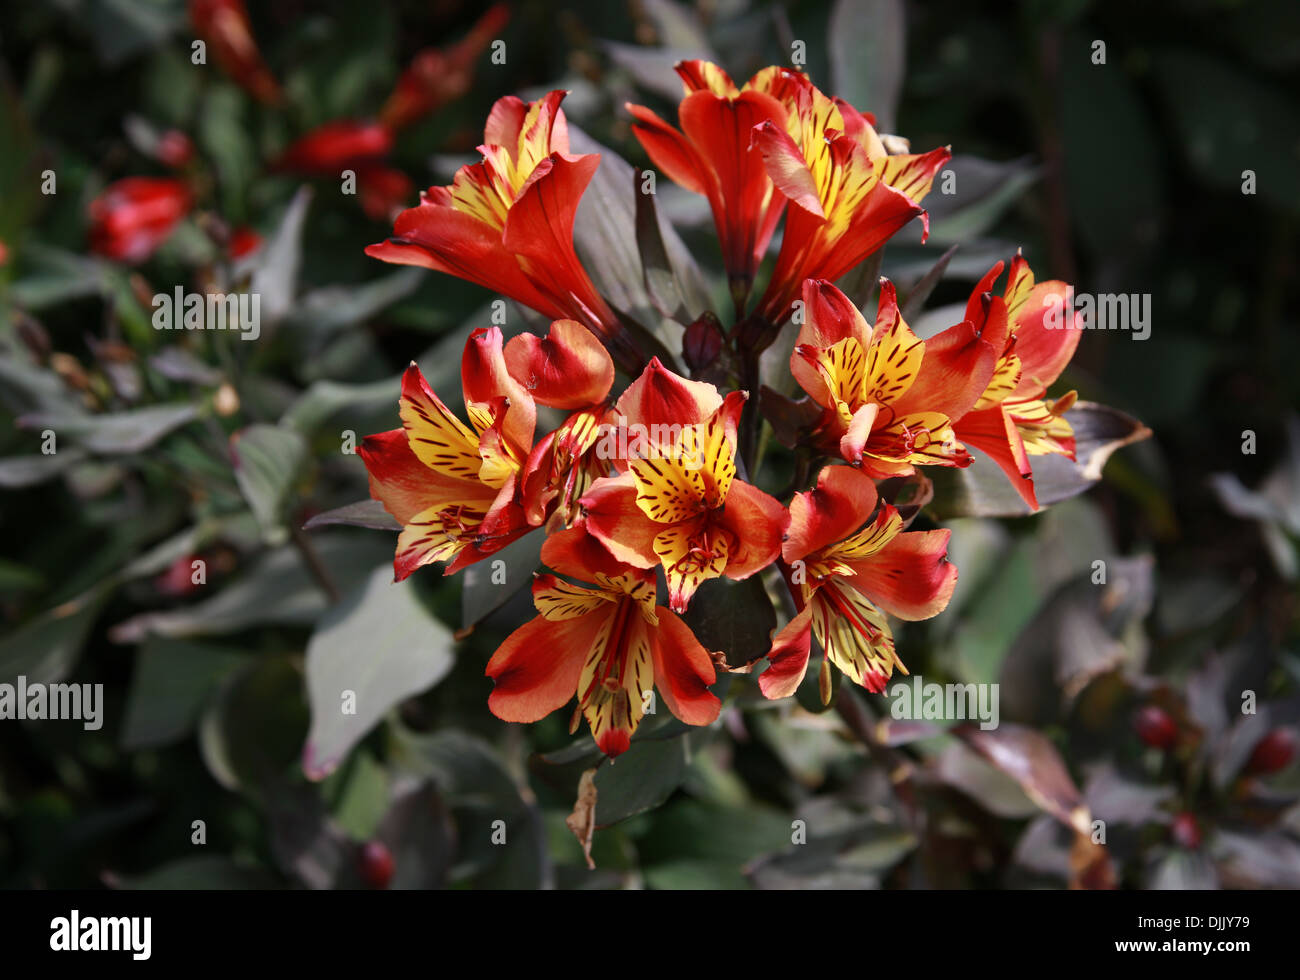 Peruvian Lily or Lily of the Incas, Alstroemeria Indian Summer 'Tesronto', Alstroemeriaceae. Stock Photo